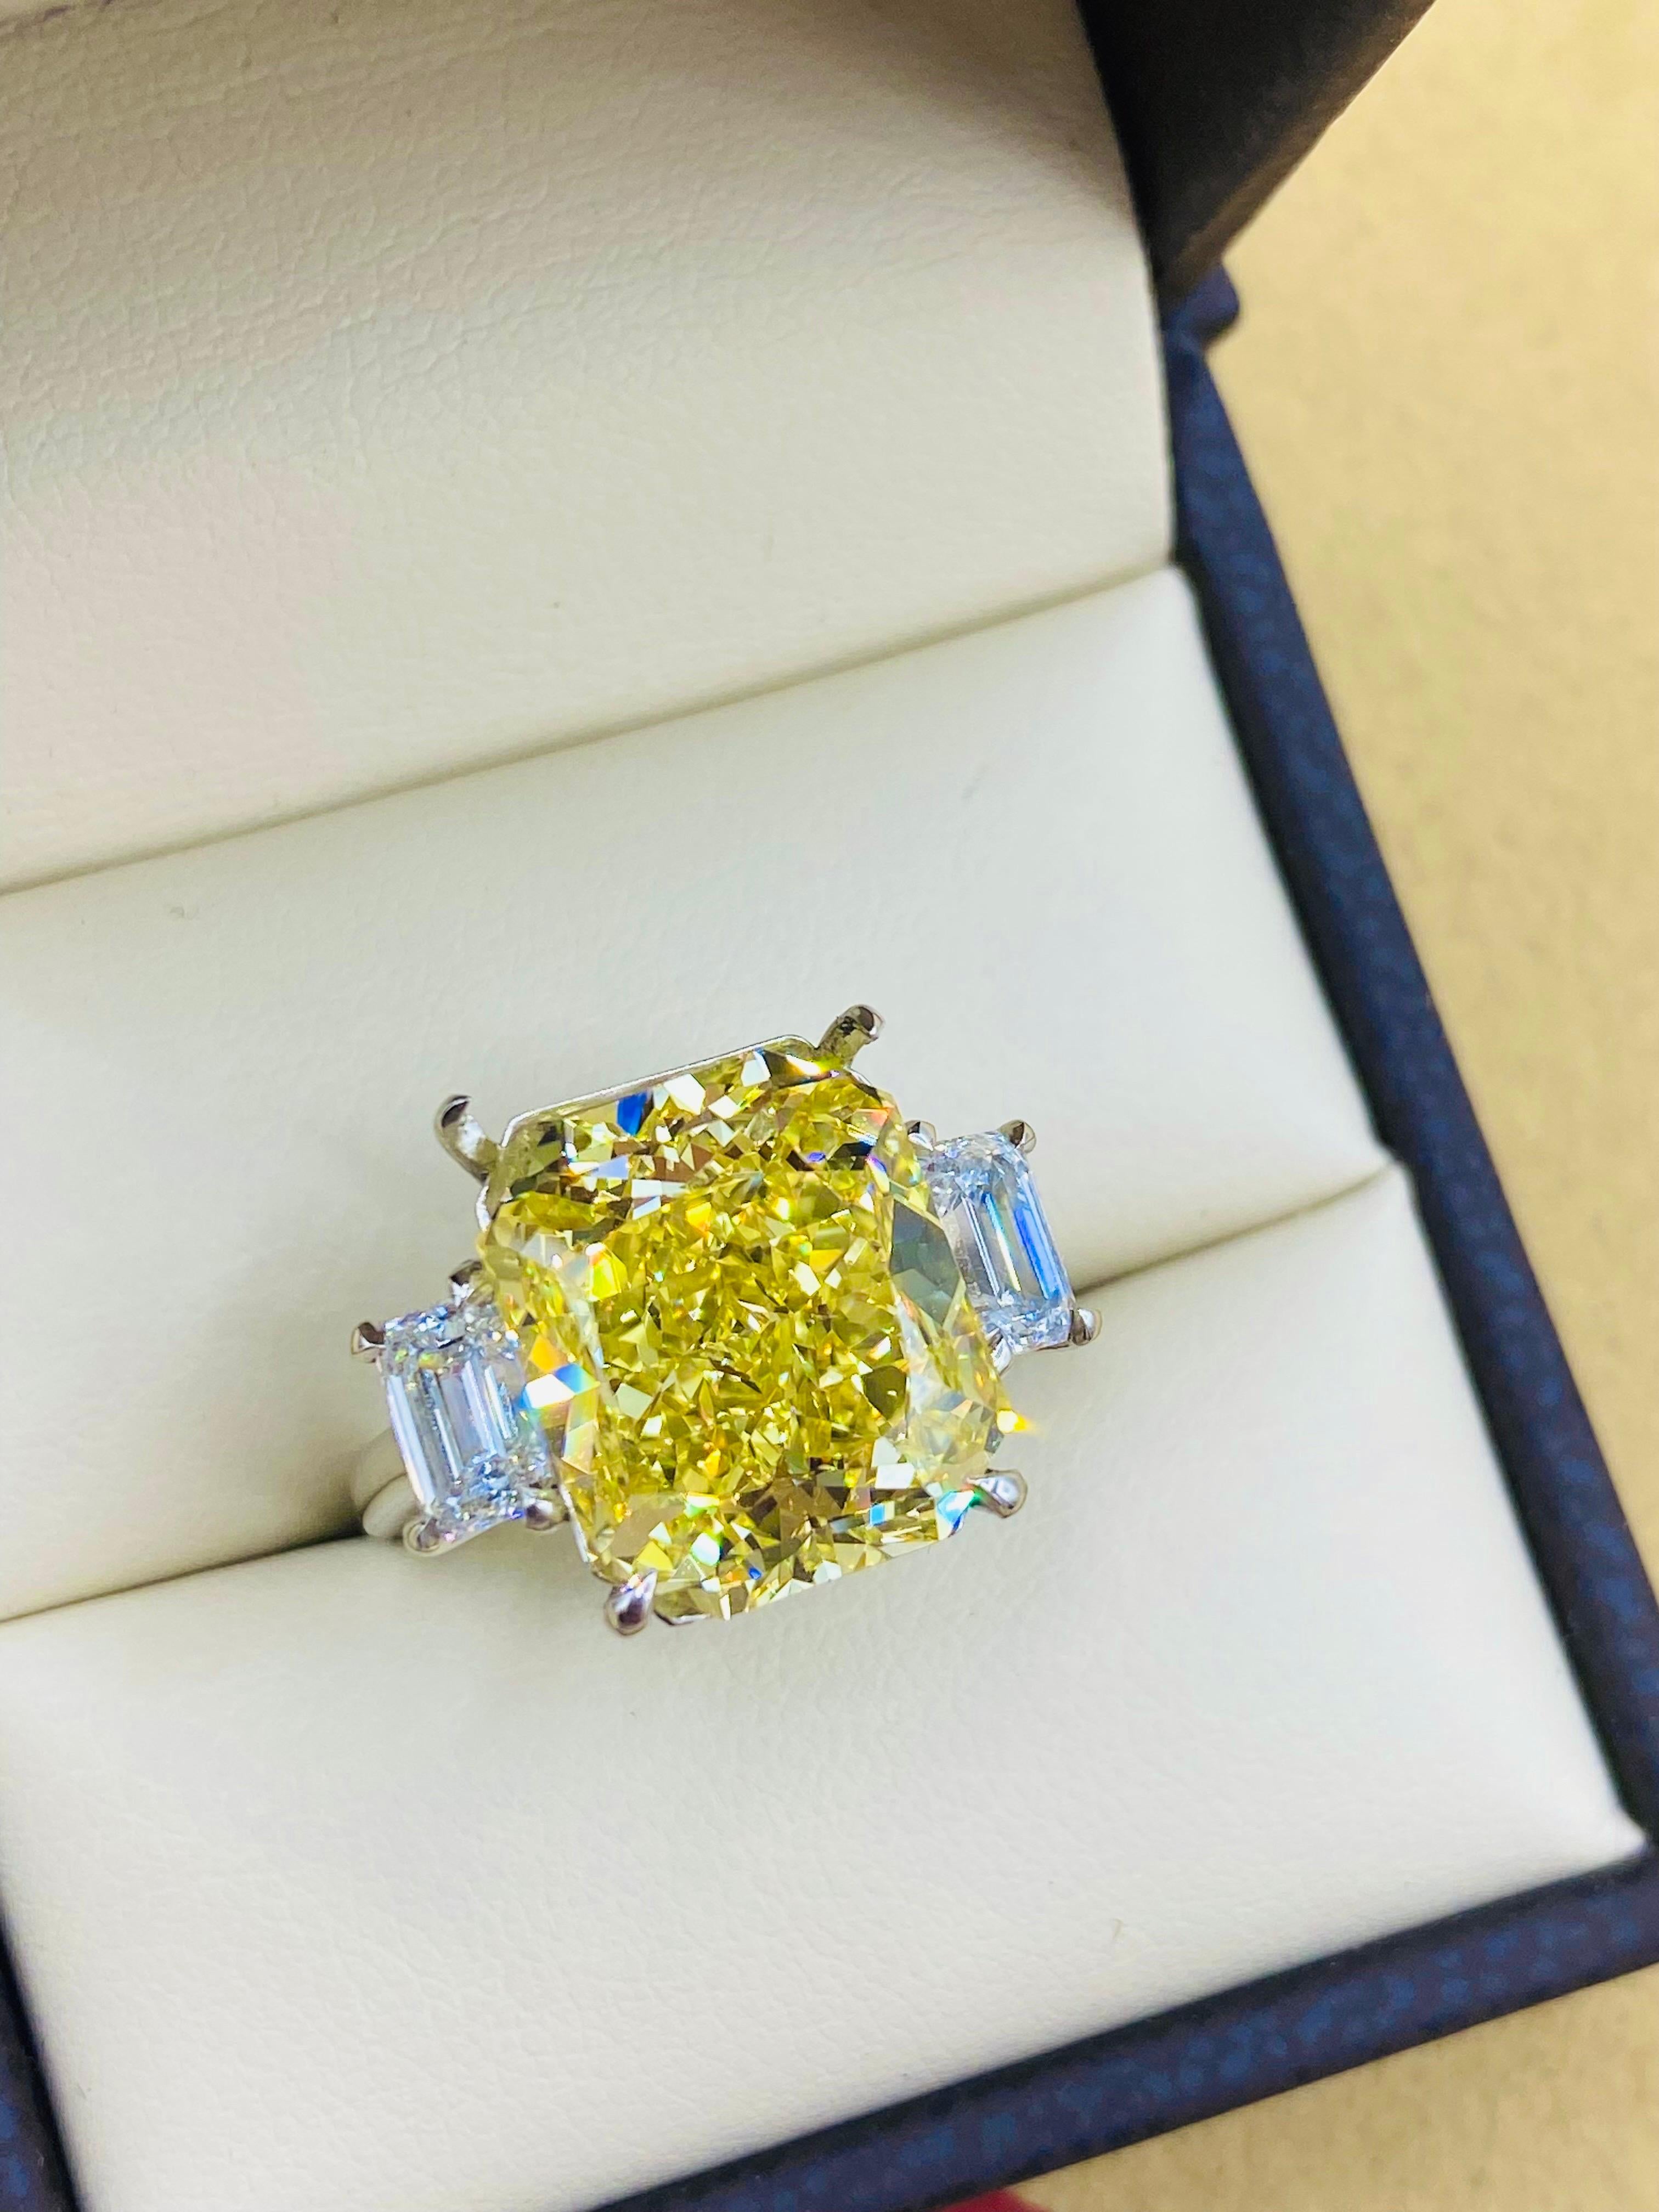 Radiant Cut Emilio Jewelry Gia Certified 9.95 Carat Fancy Intense Yellow Diamond Ring  For Sale